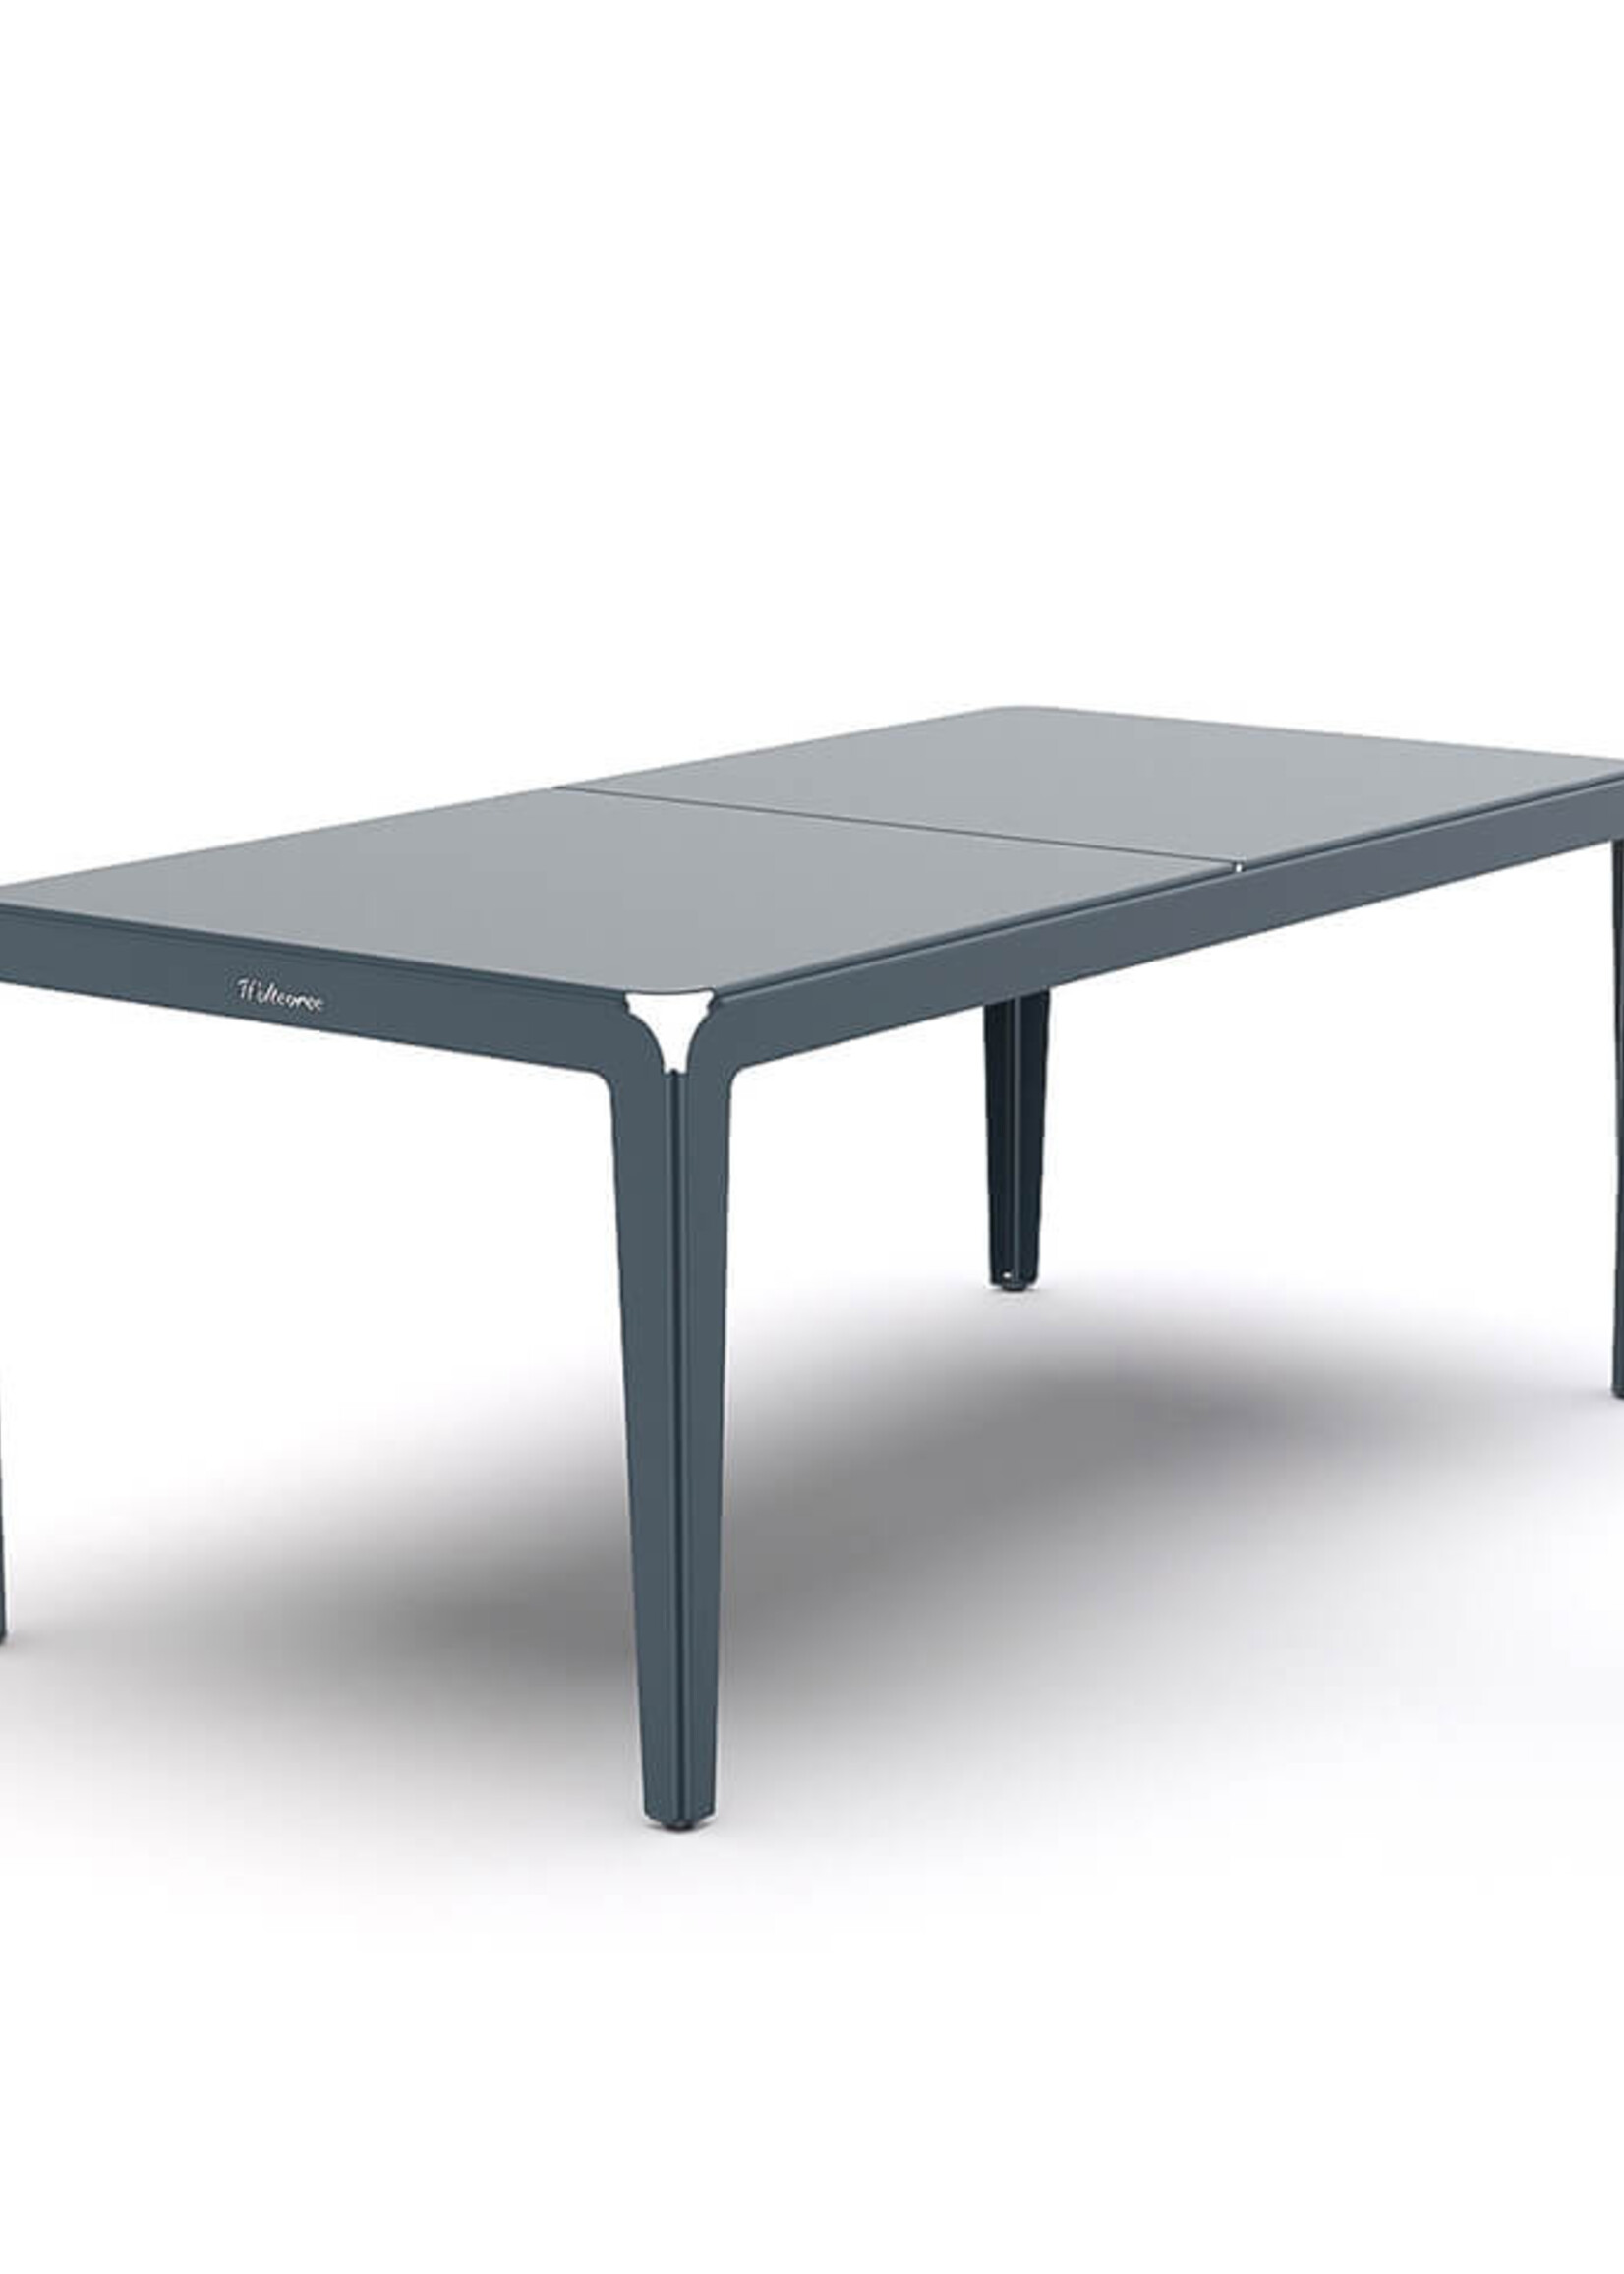 Weltevree Weltevree - Bended Table 180 - Table de jardin légère en aluminium - Gris Bleu